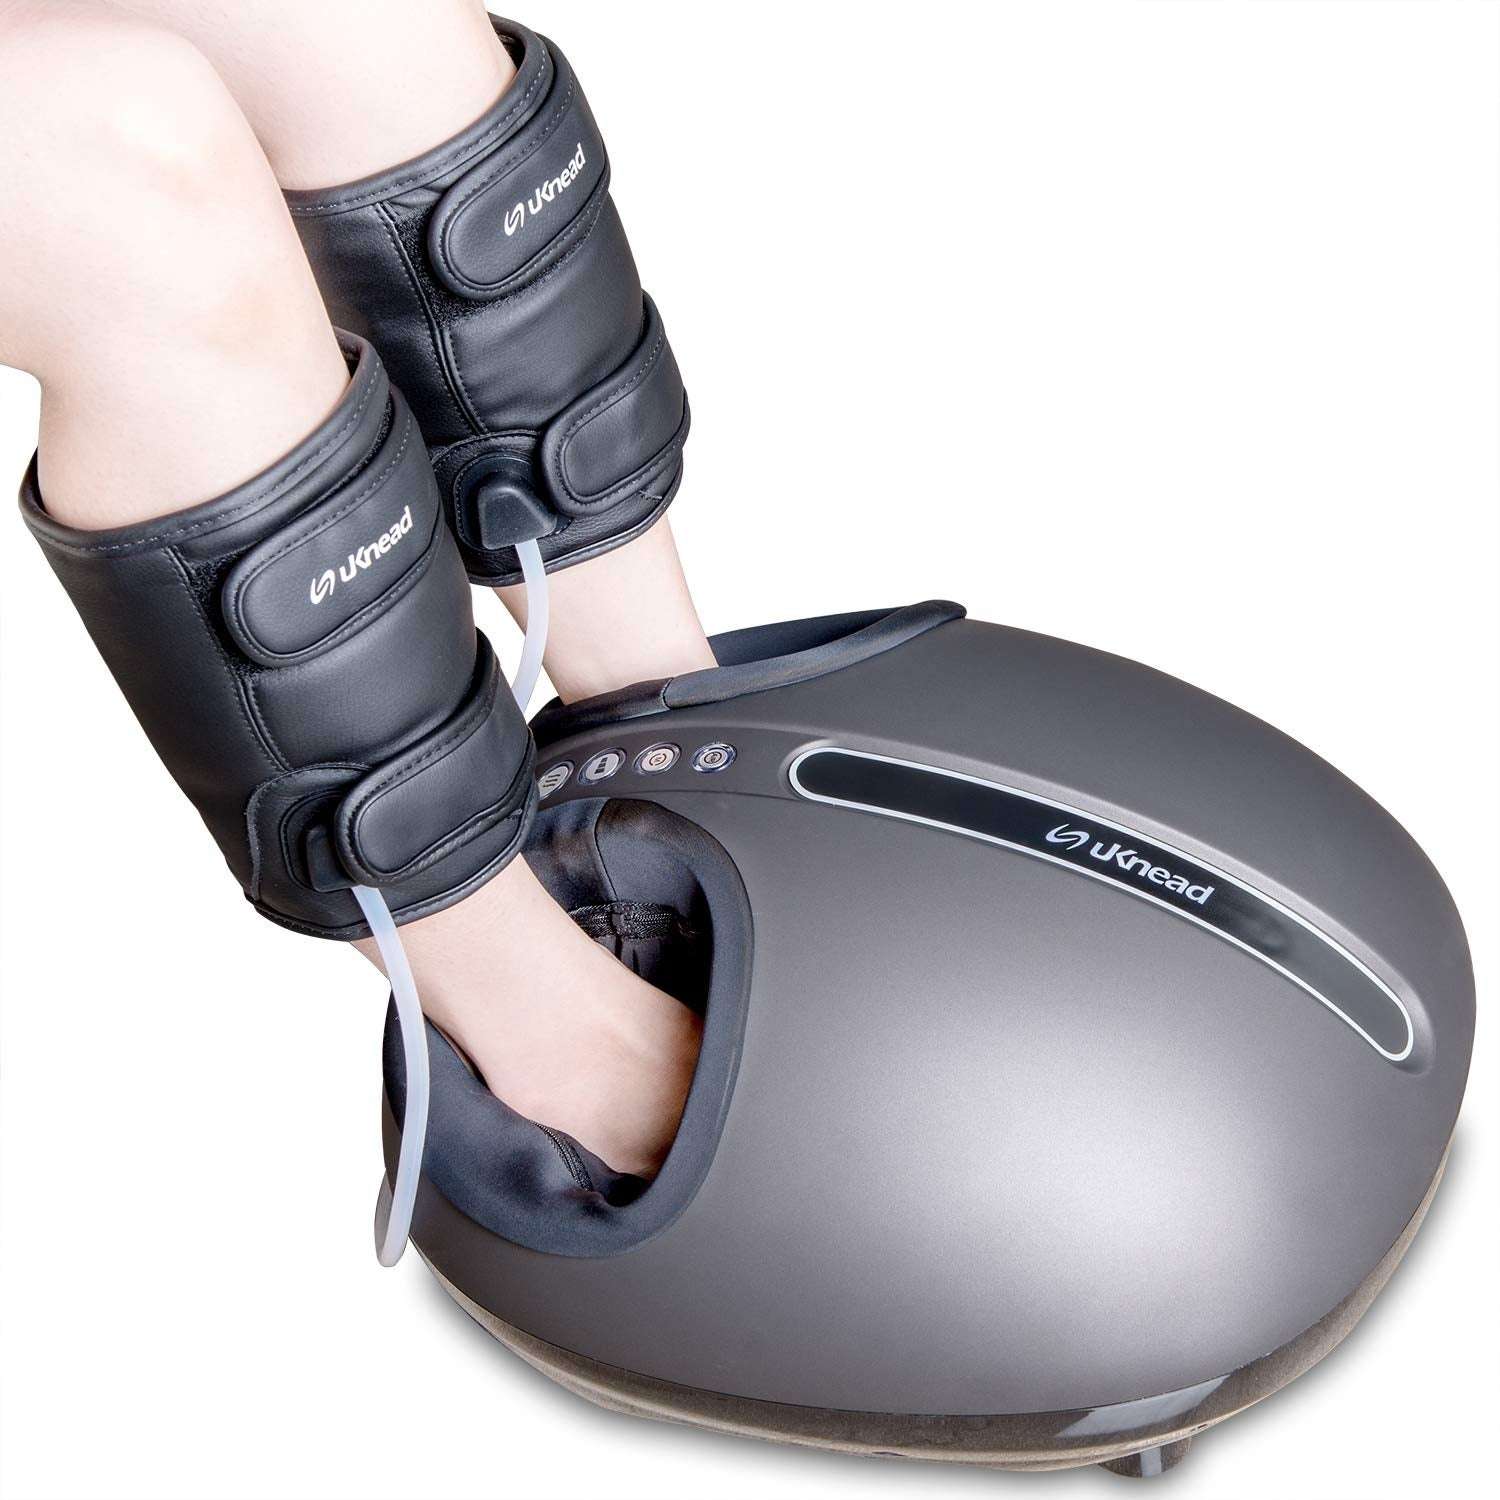 Shop Uknead Airopro Shiatsu Foot Leg Massager Overstock ...